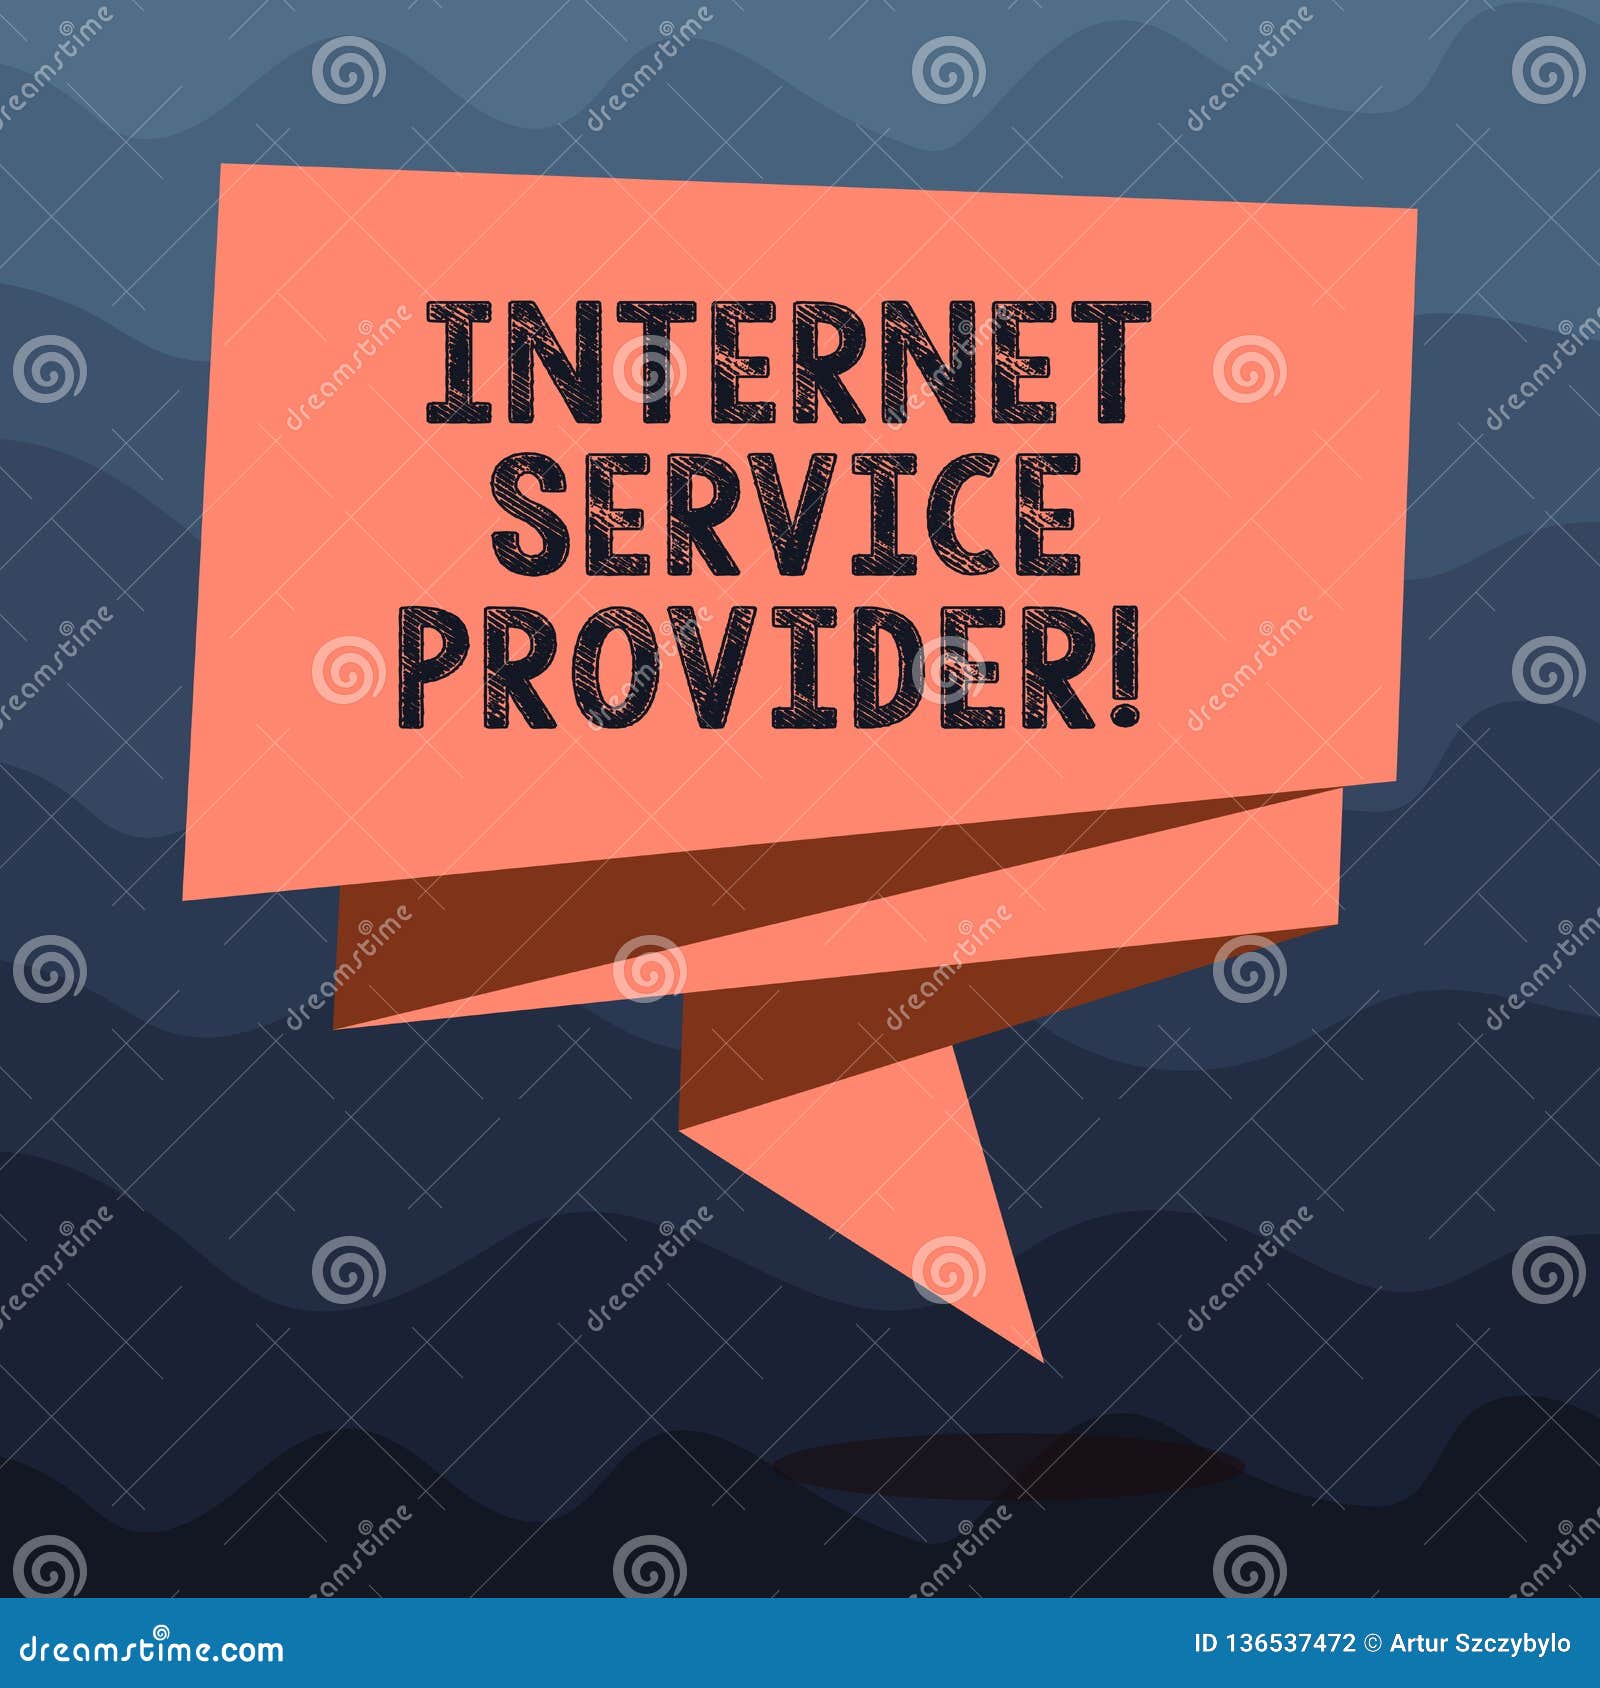 Essay about internet service